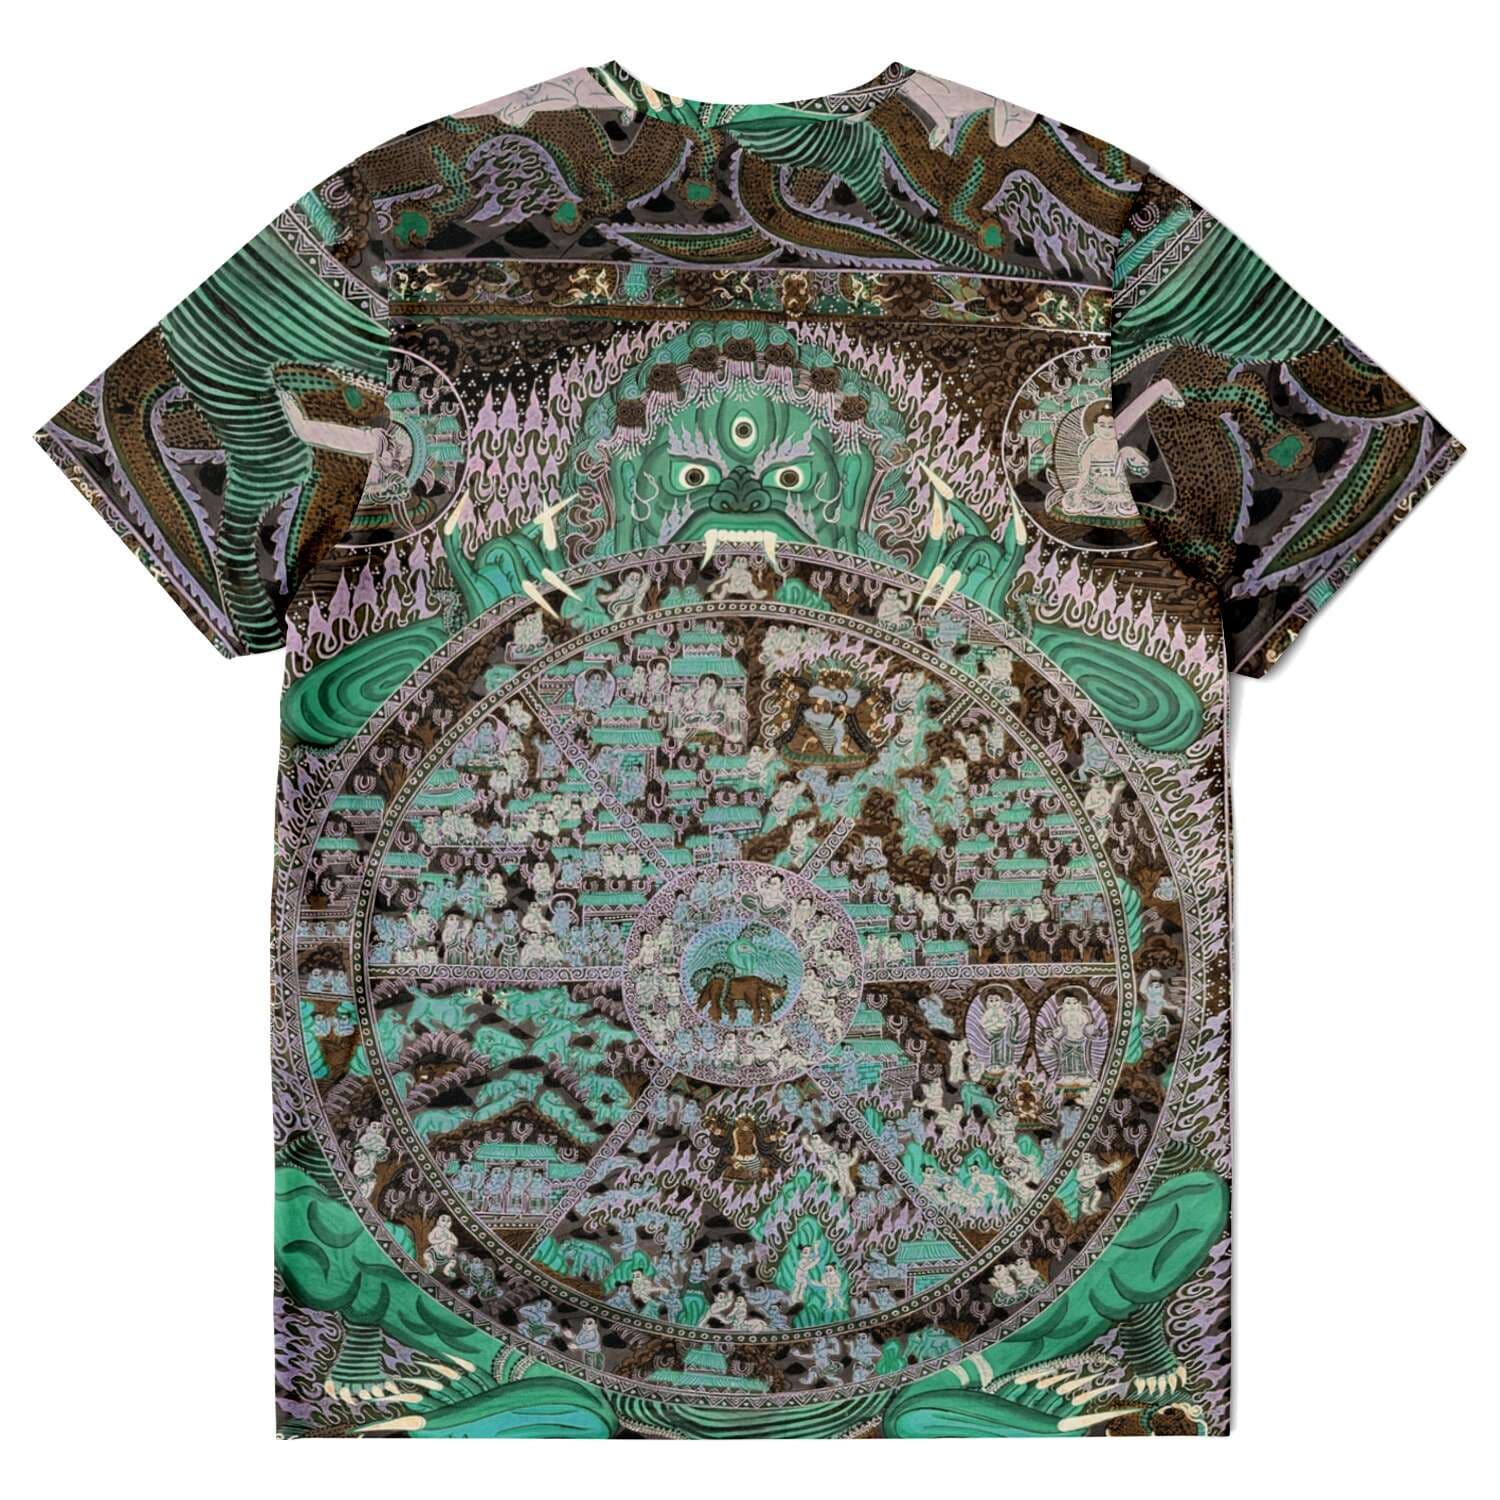 T-shirt Samsara: The Circle of Transmigration | The Law of Karma | Rebirth and Reincarnation | Buddhist Vintage T-Shirt